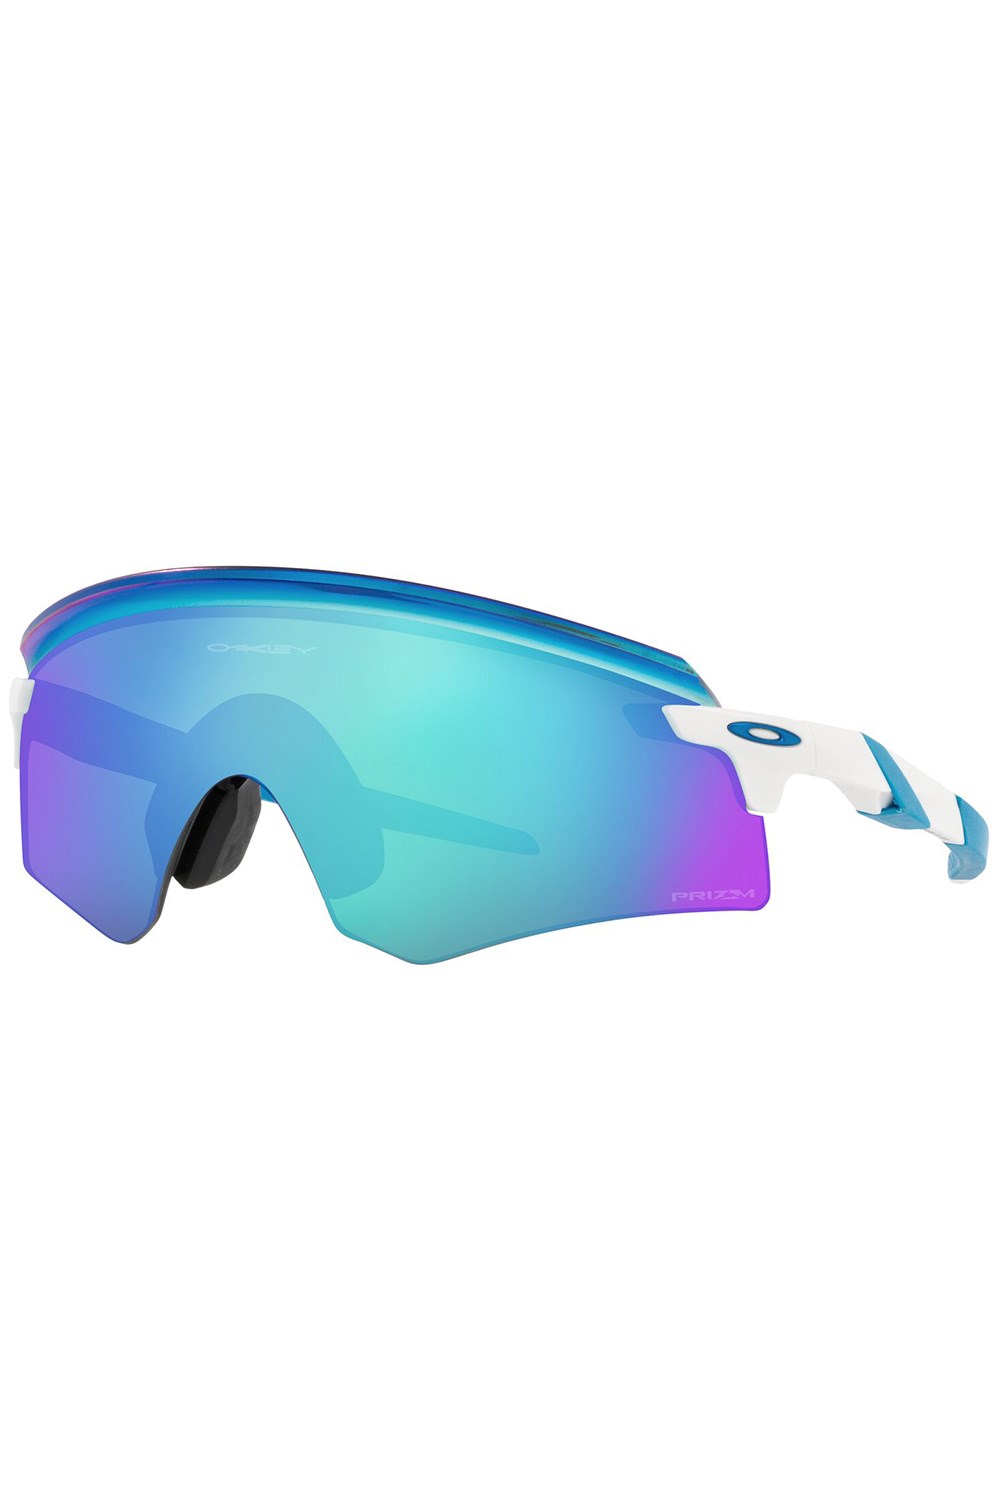 Encoder Unisex Cycling Sunglasses -